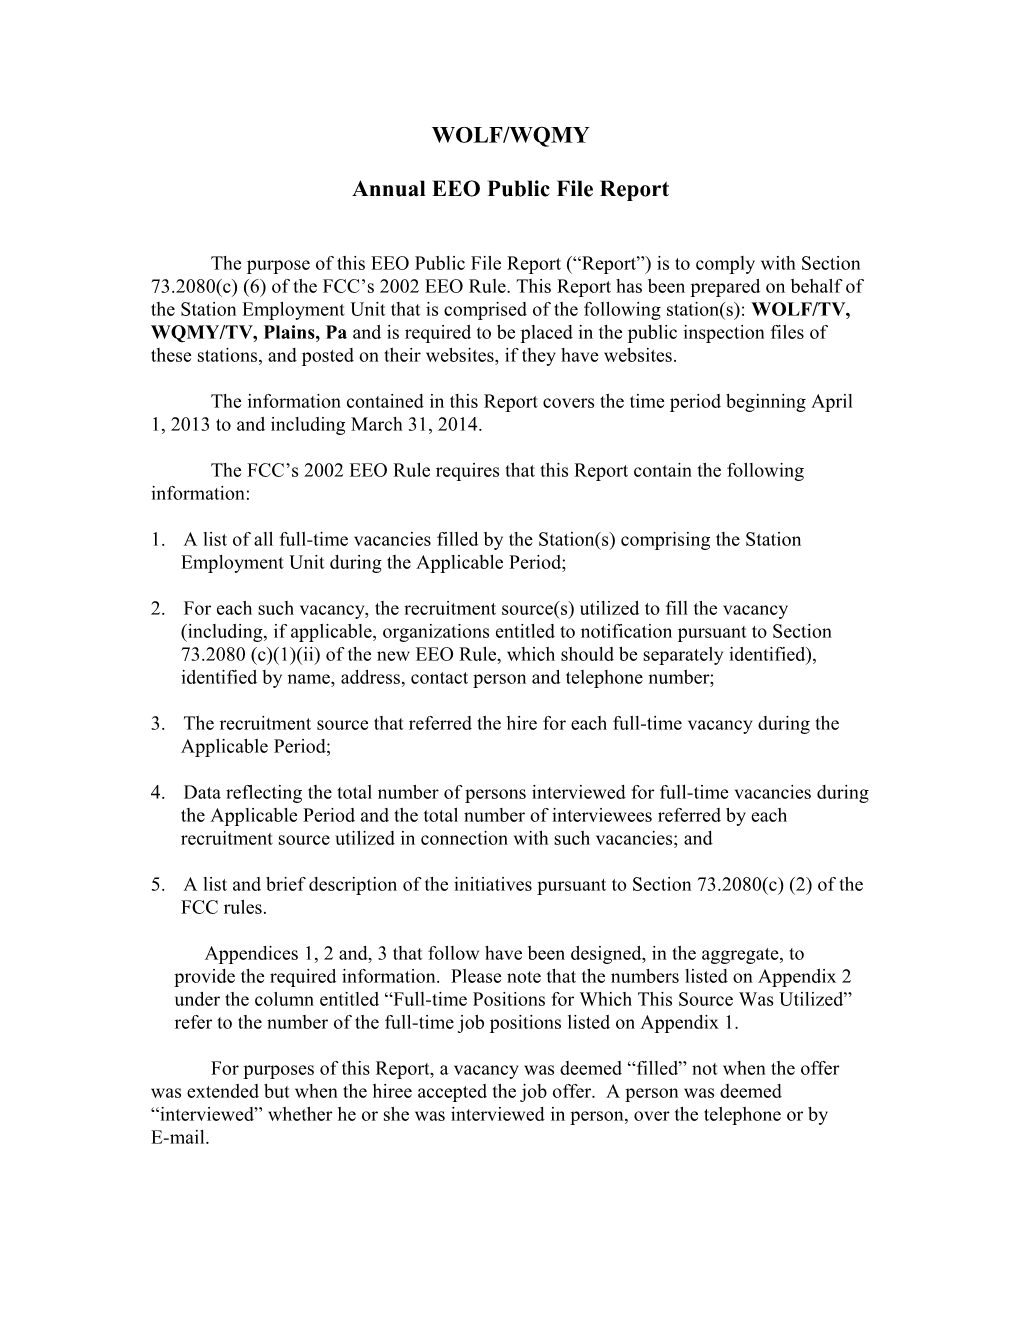 Sample Annual EEO Public File Report Form